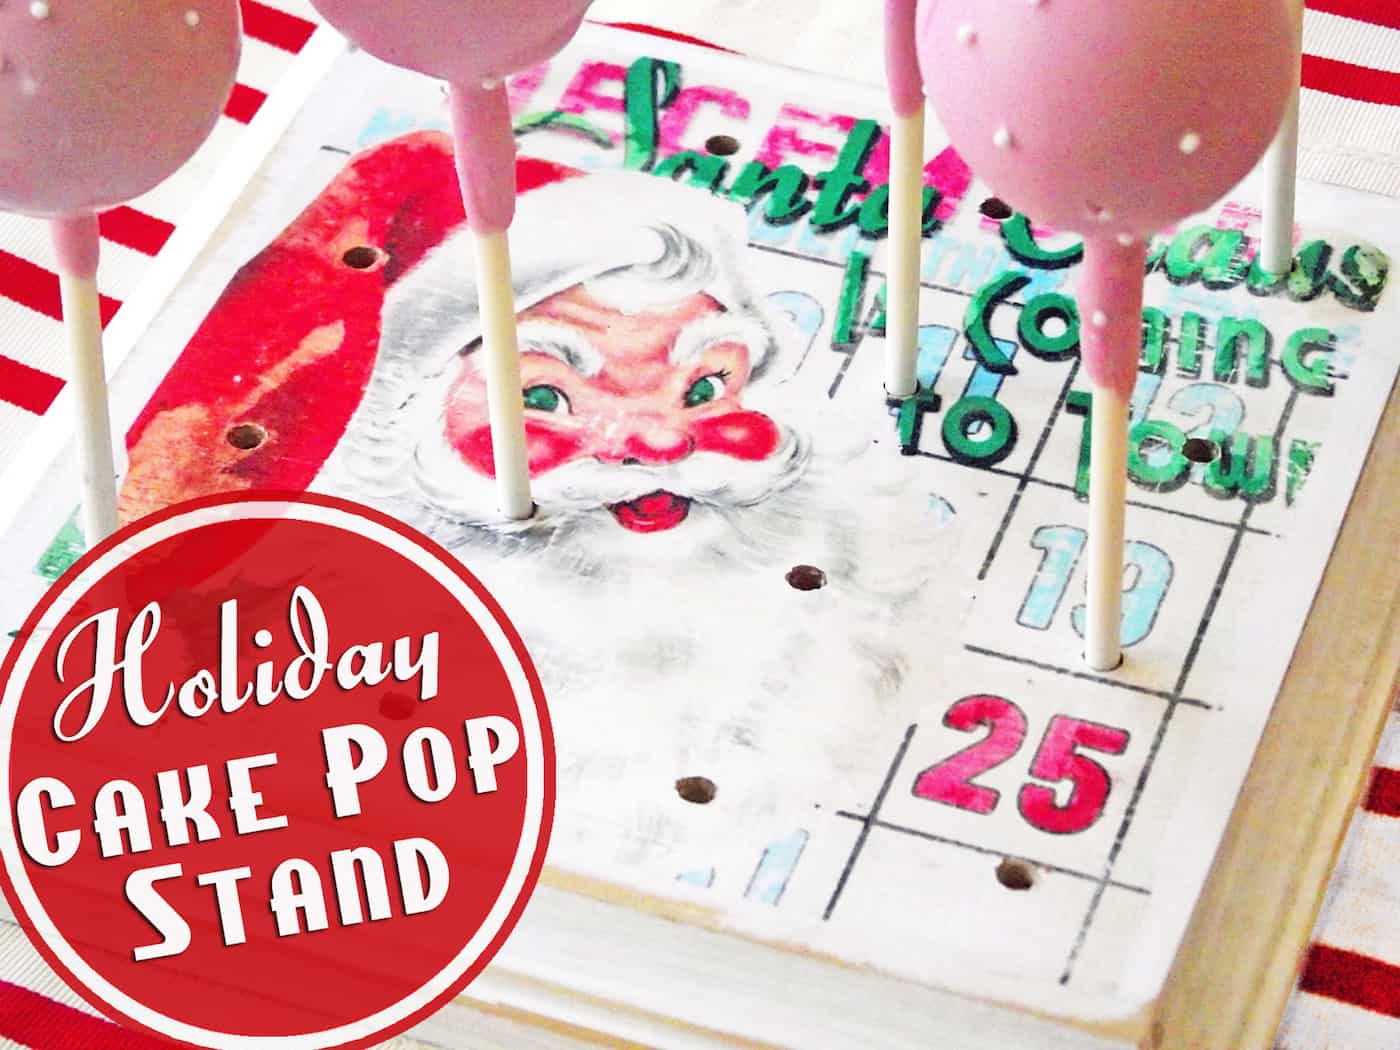 DIY Cake Pop Stand for the Christmas Holidays